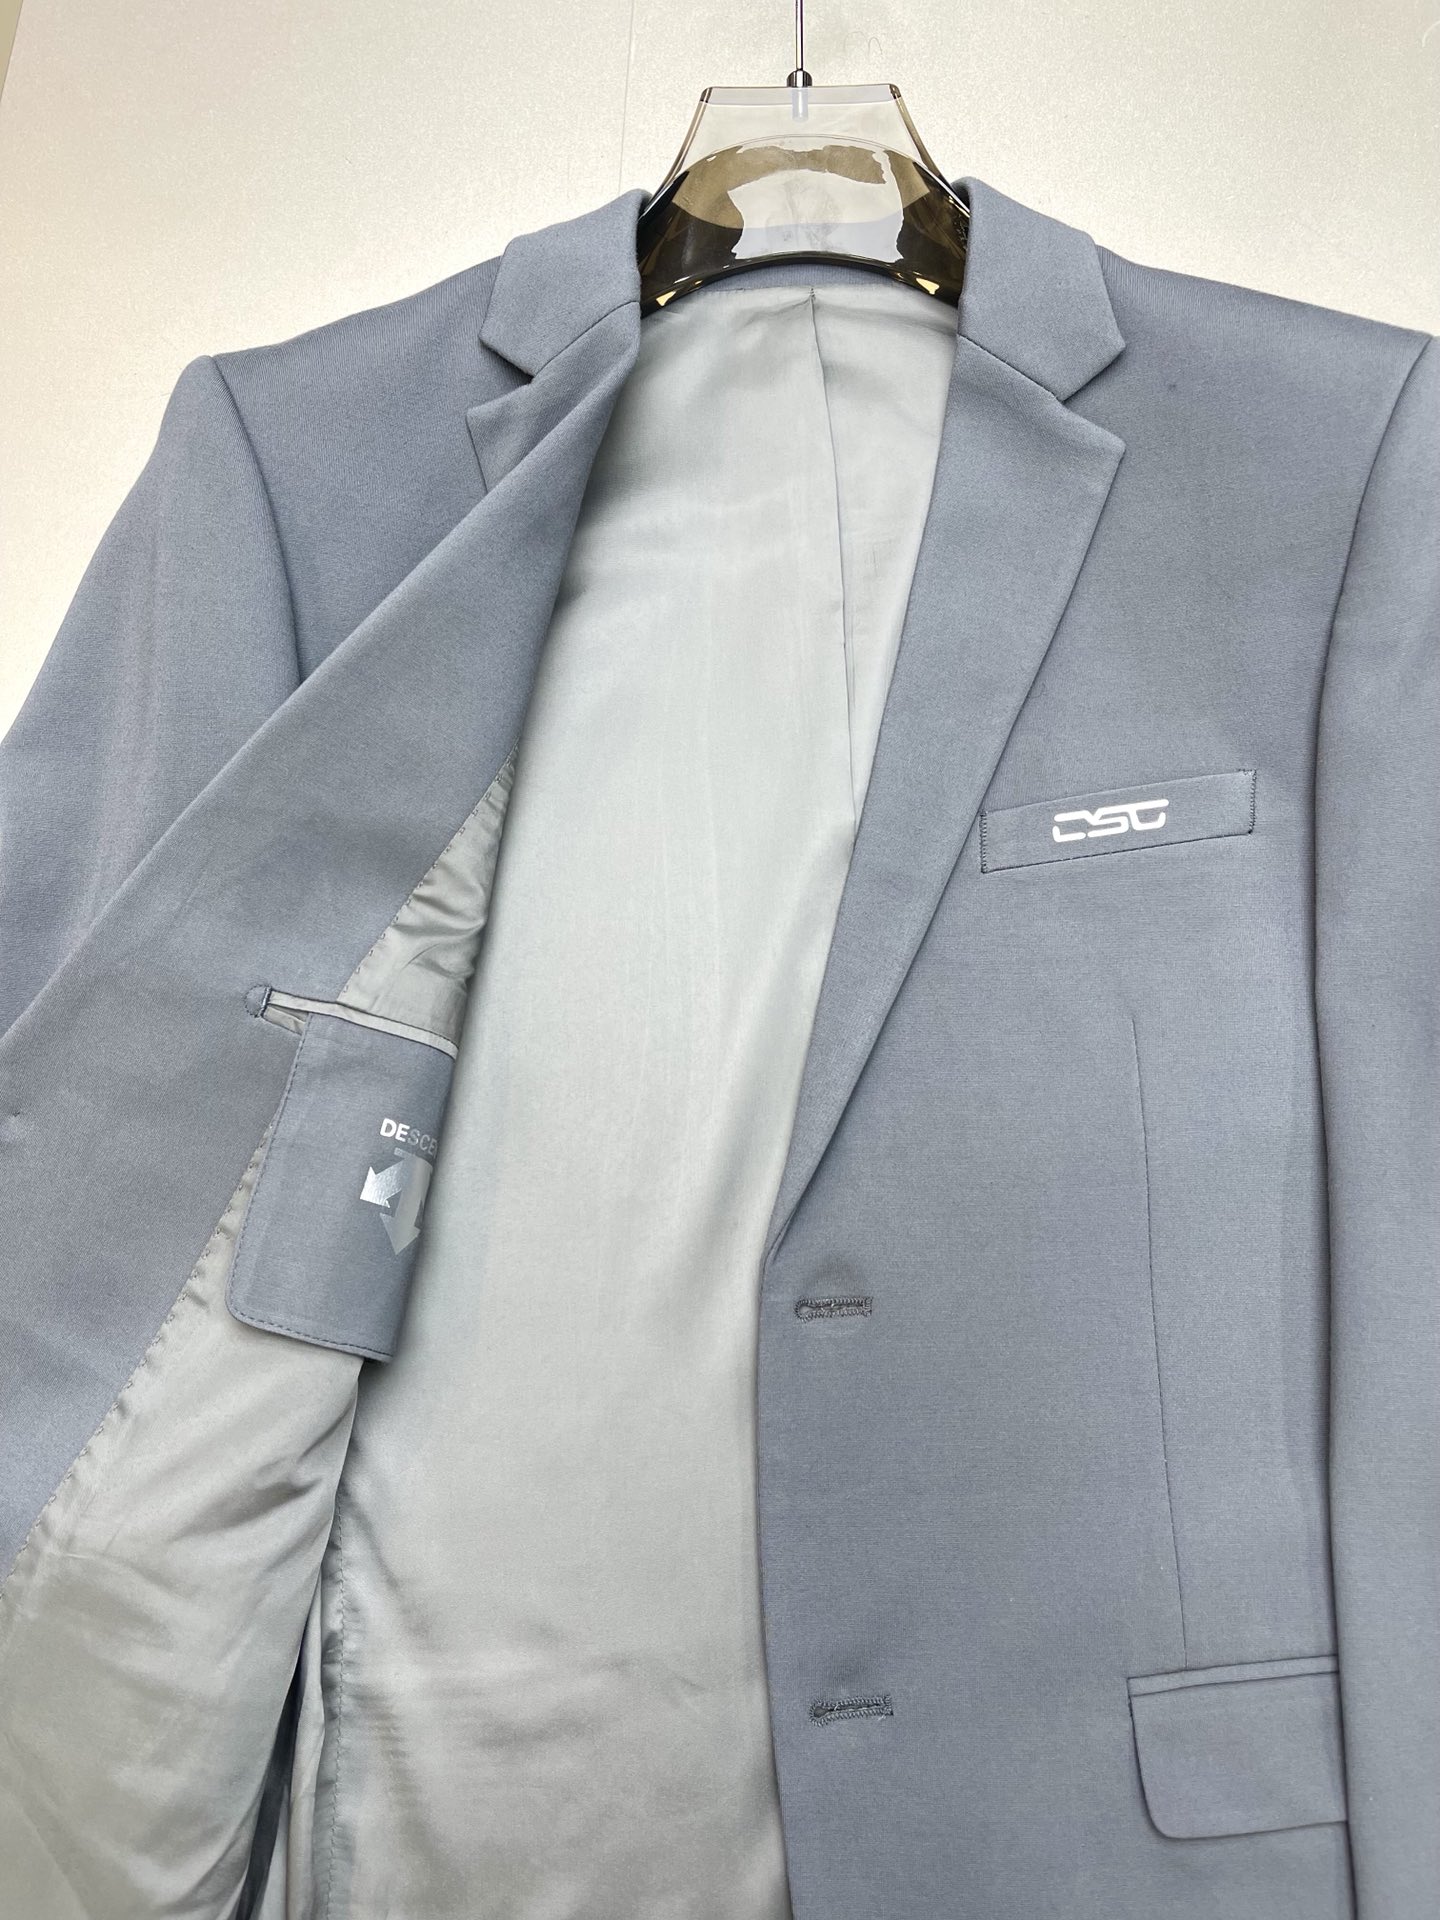 ️DESCENT*迪桑-特24s新款男士休闲运动休闲西服套装精选罗马布料.西服可以称得上是硬通货男人衣橱